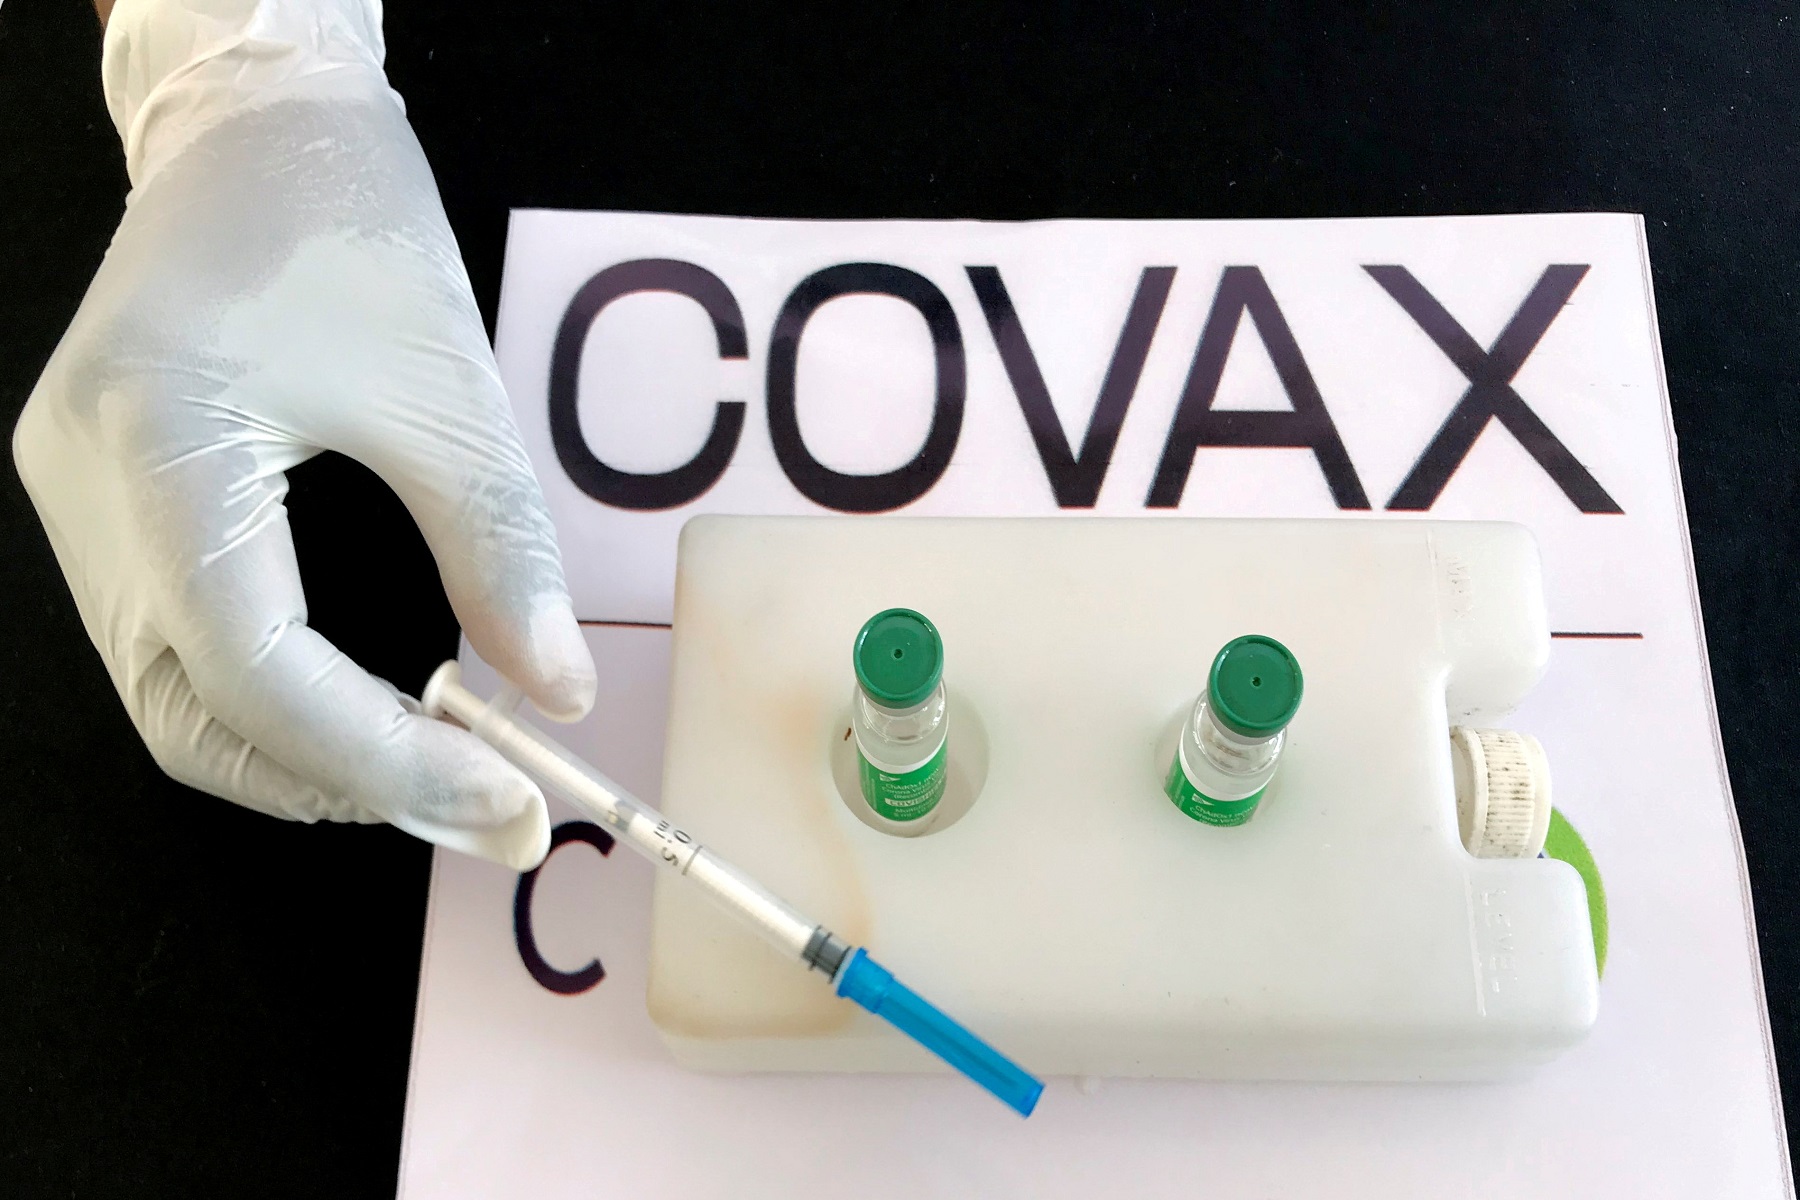 Covax Εμβολιασμοί: Η Πρωτοβουλία Παγκόσμιας Πρόσβασης στο εμβόλιο ενισχύθηκε με δόσεις εμβολίου covid της Moderna 500 εκατομμυρίων